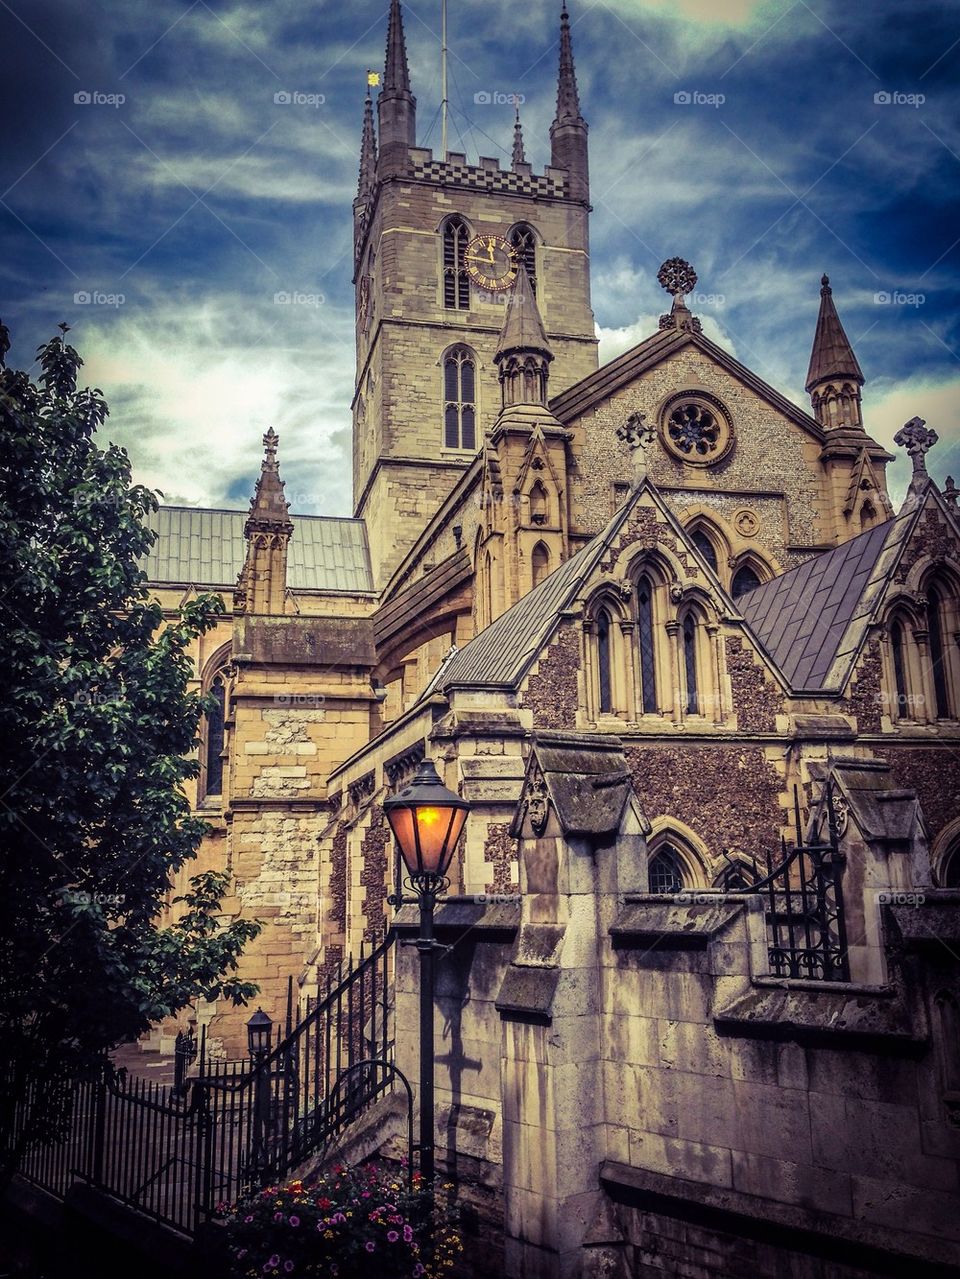 London church